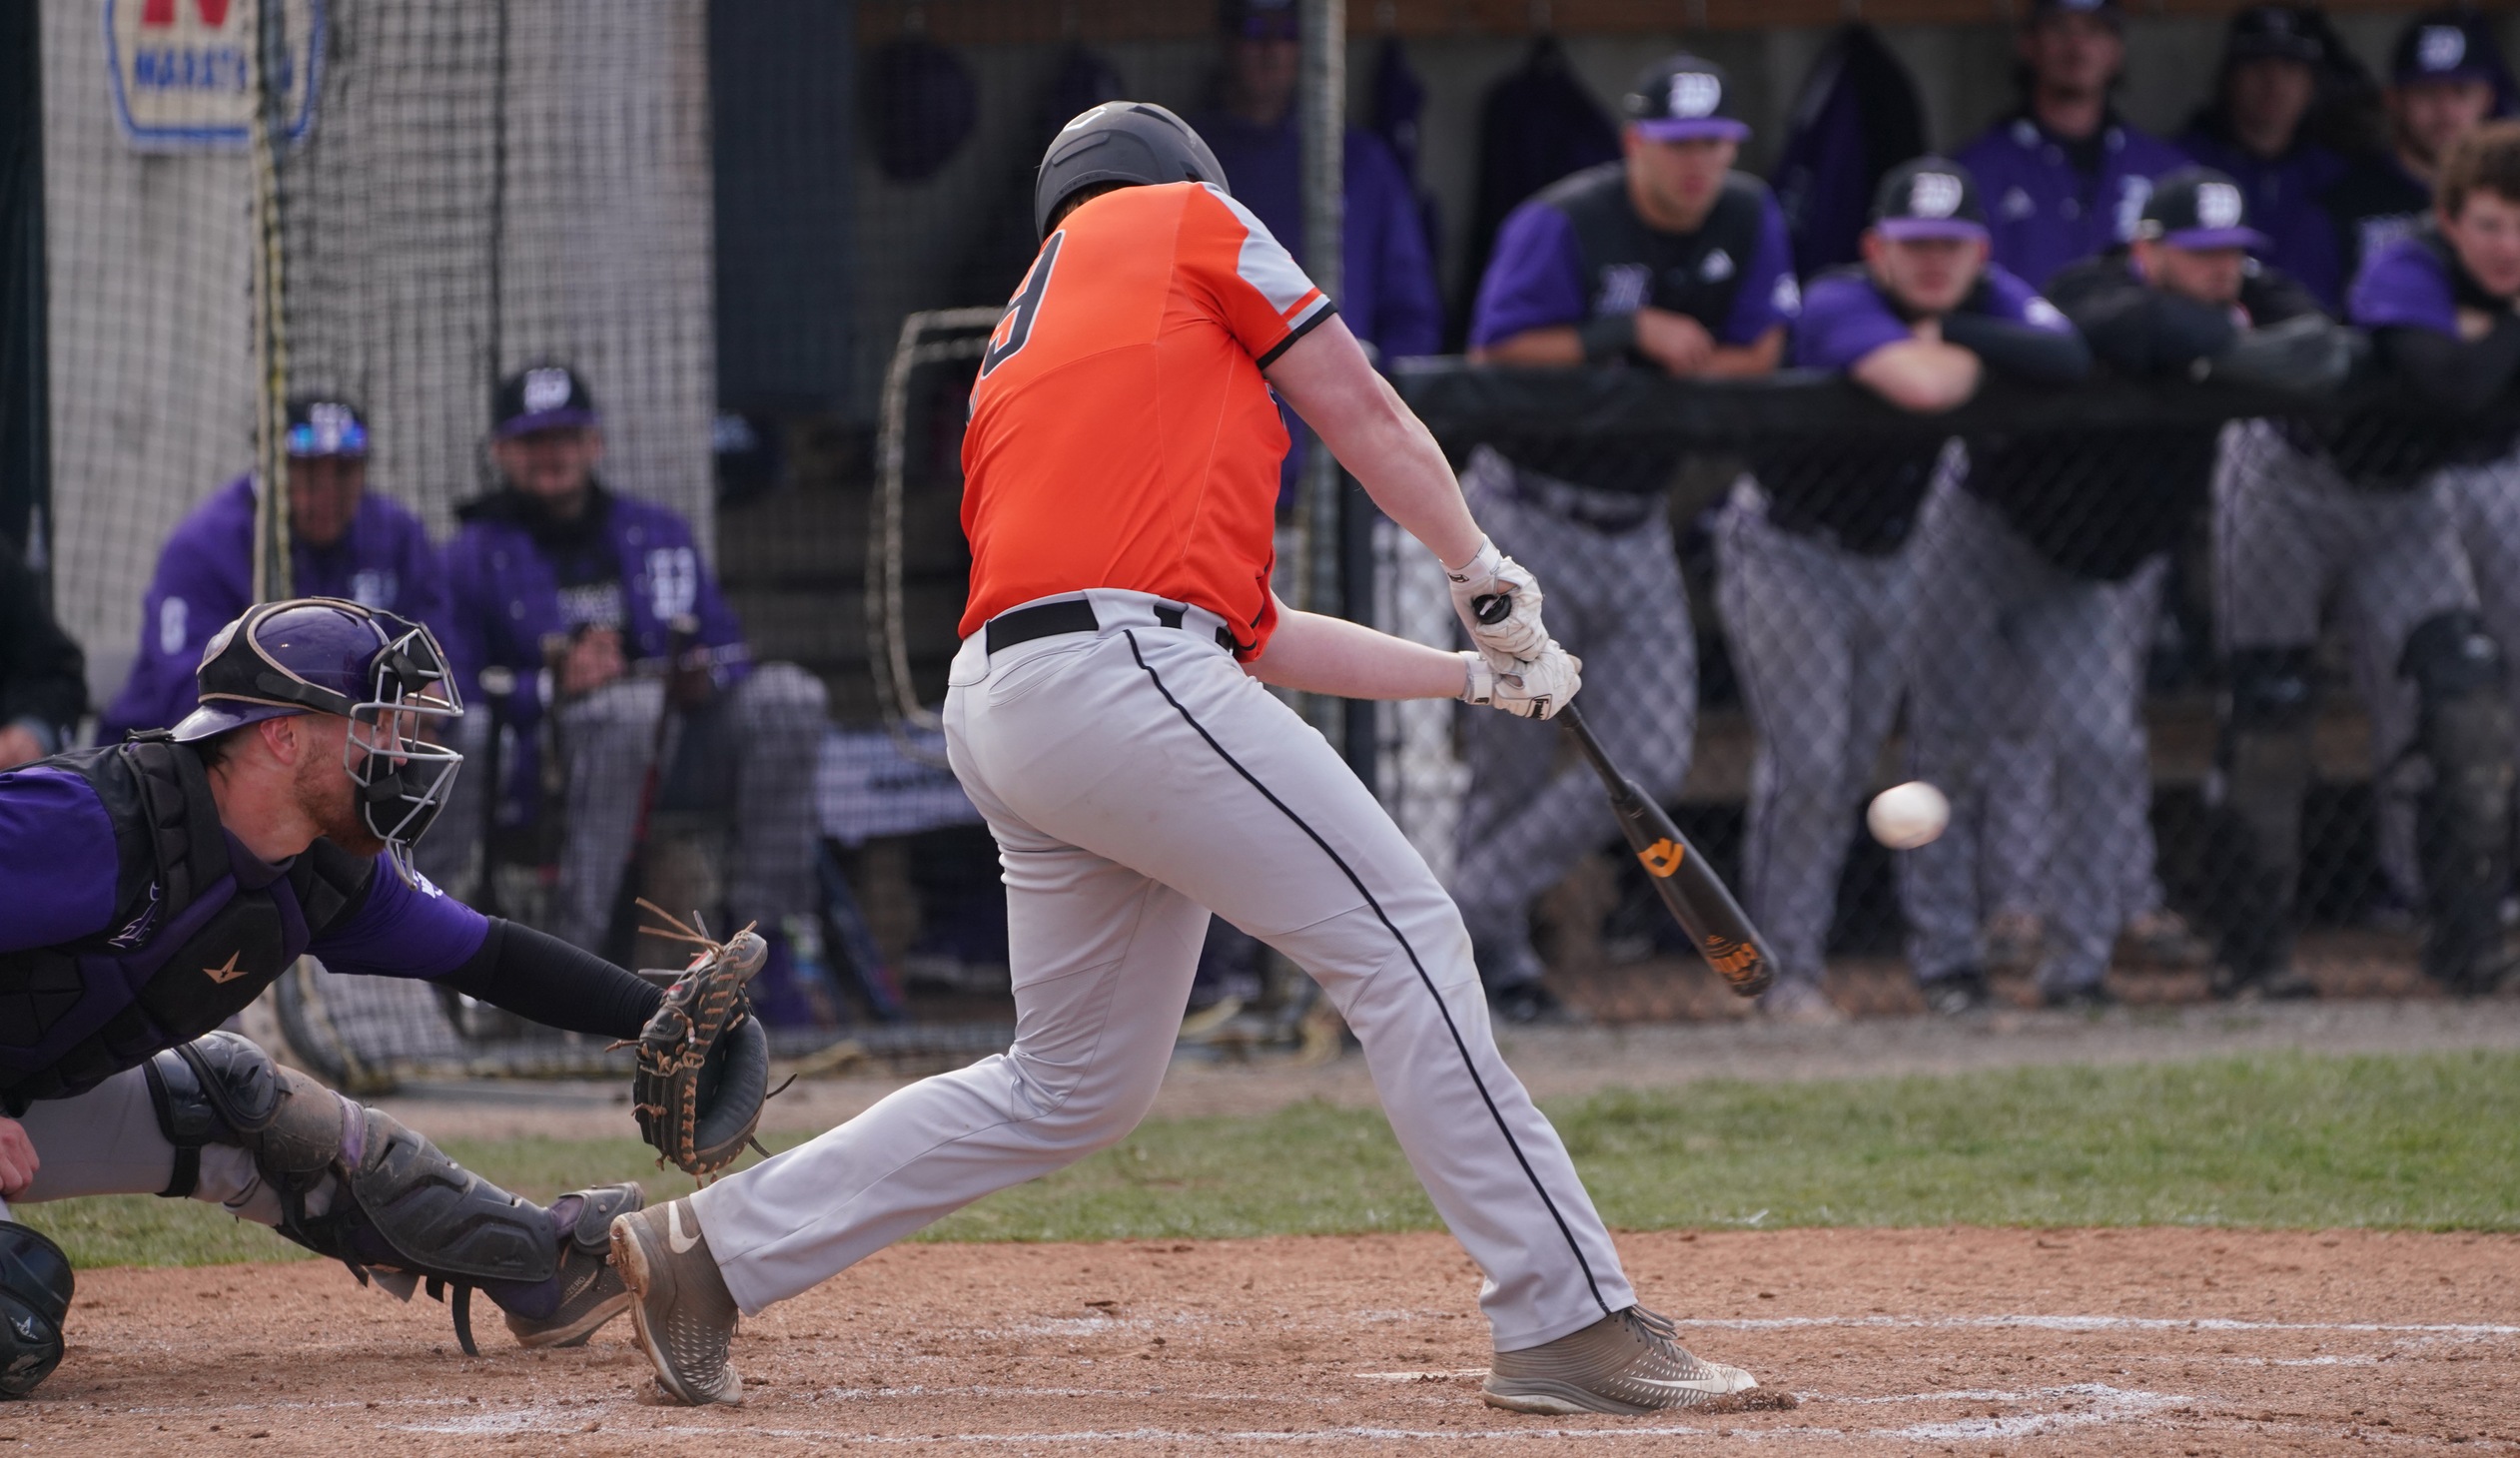 baseball player in orange jersey hitting left handed
